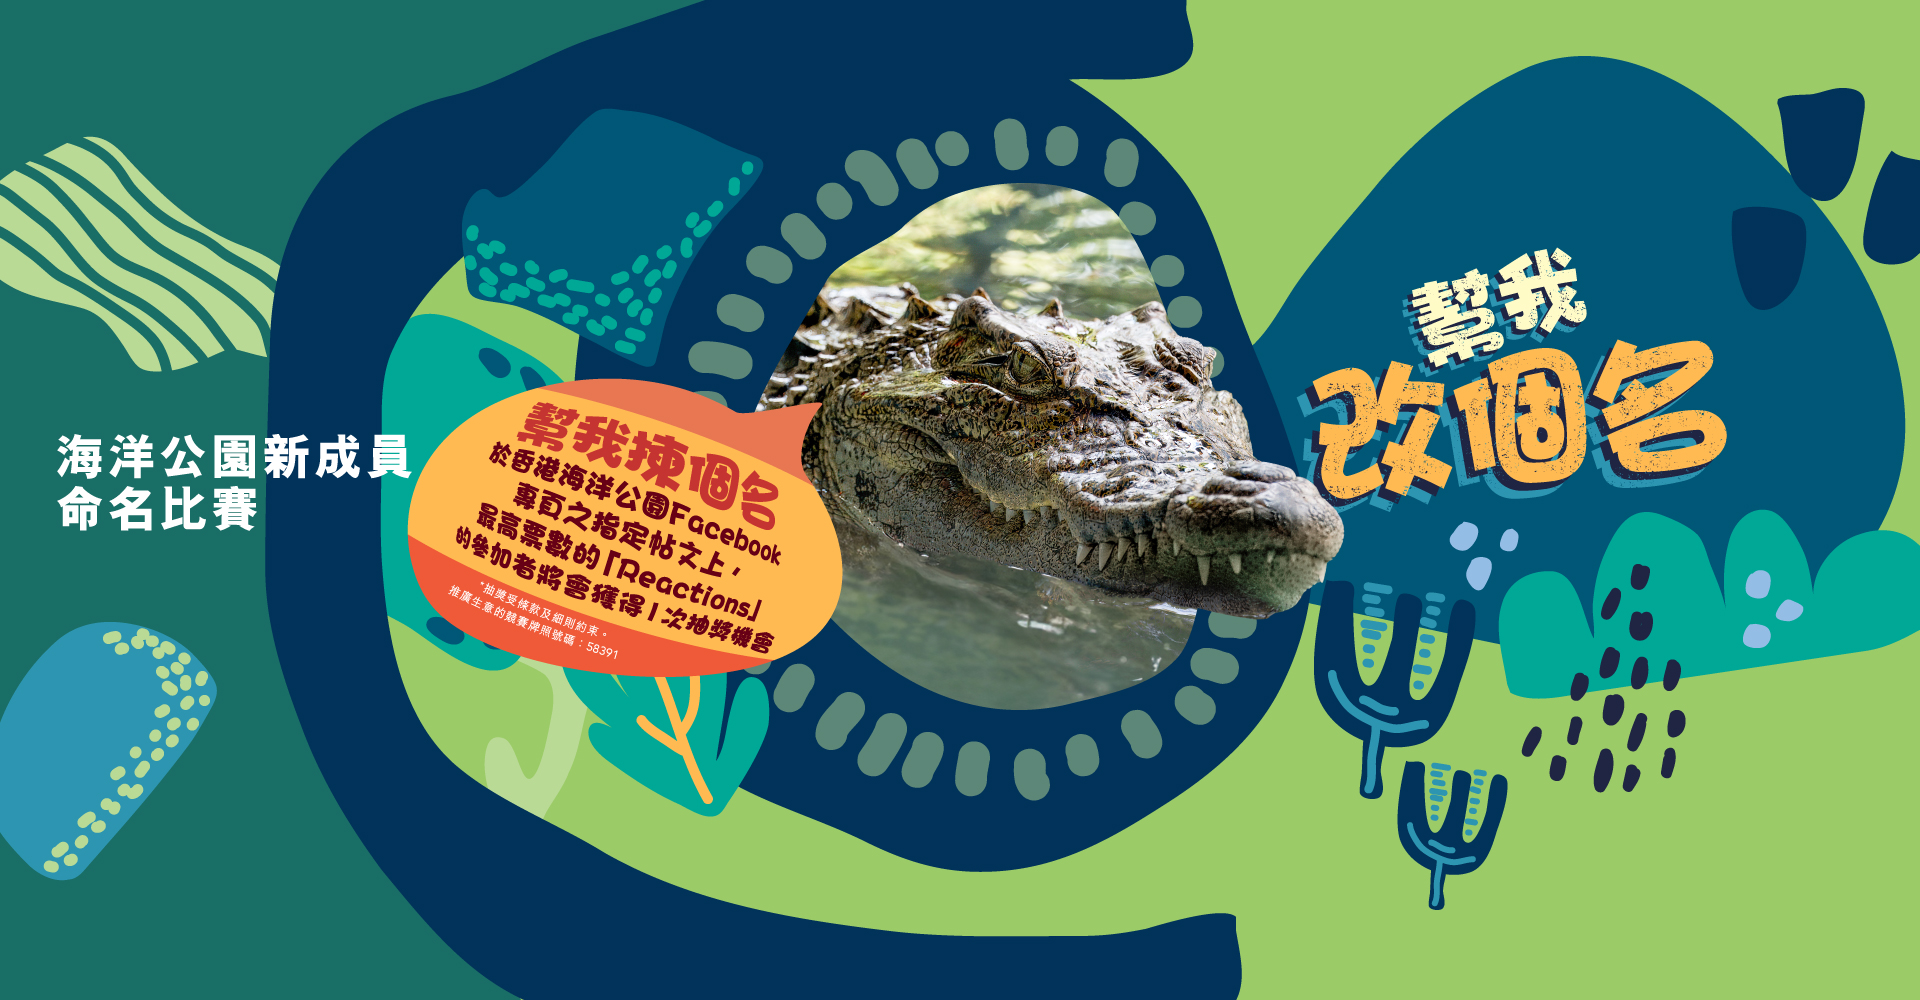 https://media.oceanpark.com.hk/files/s3fs-public/op-crocodile-naming-vote-desktop-banner-tc.jpg